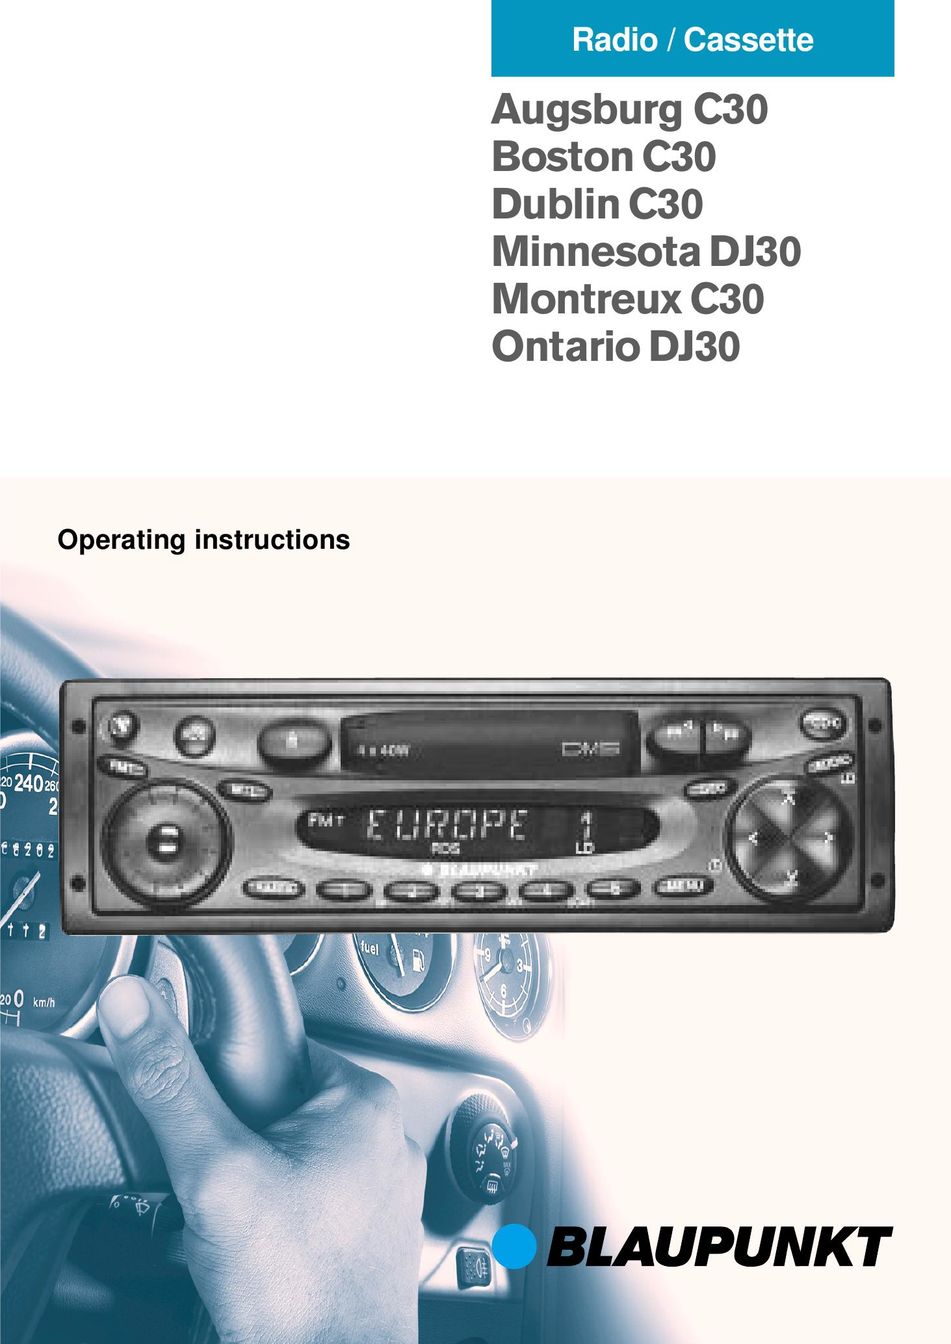 Blaupunkt AUGSBURG C30 Car Stereo System User Manual